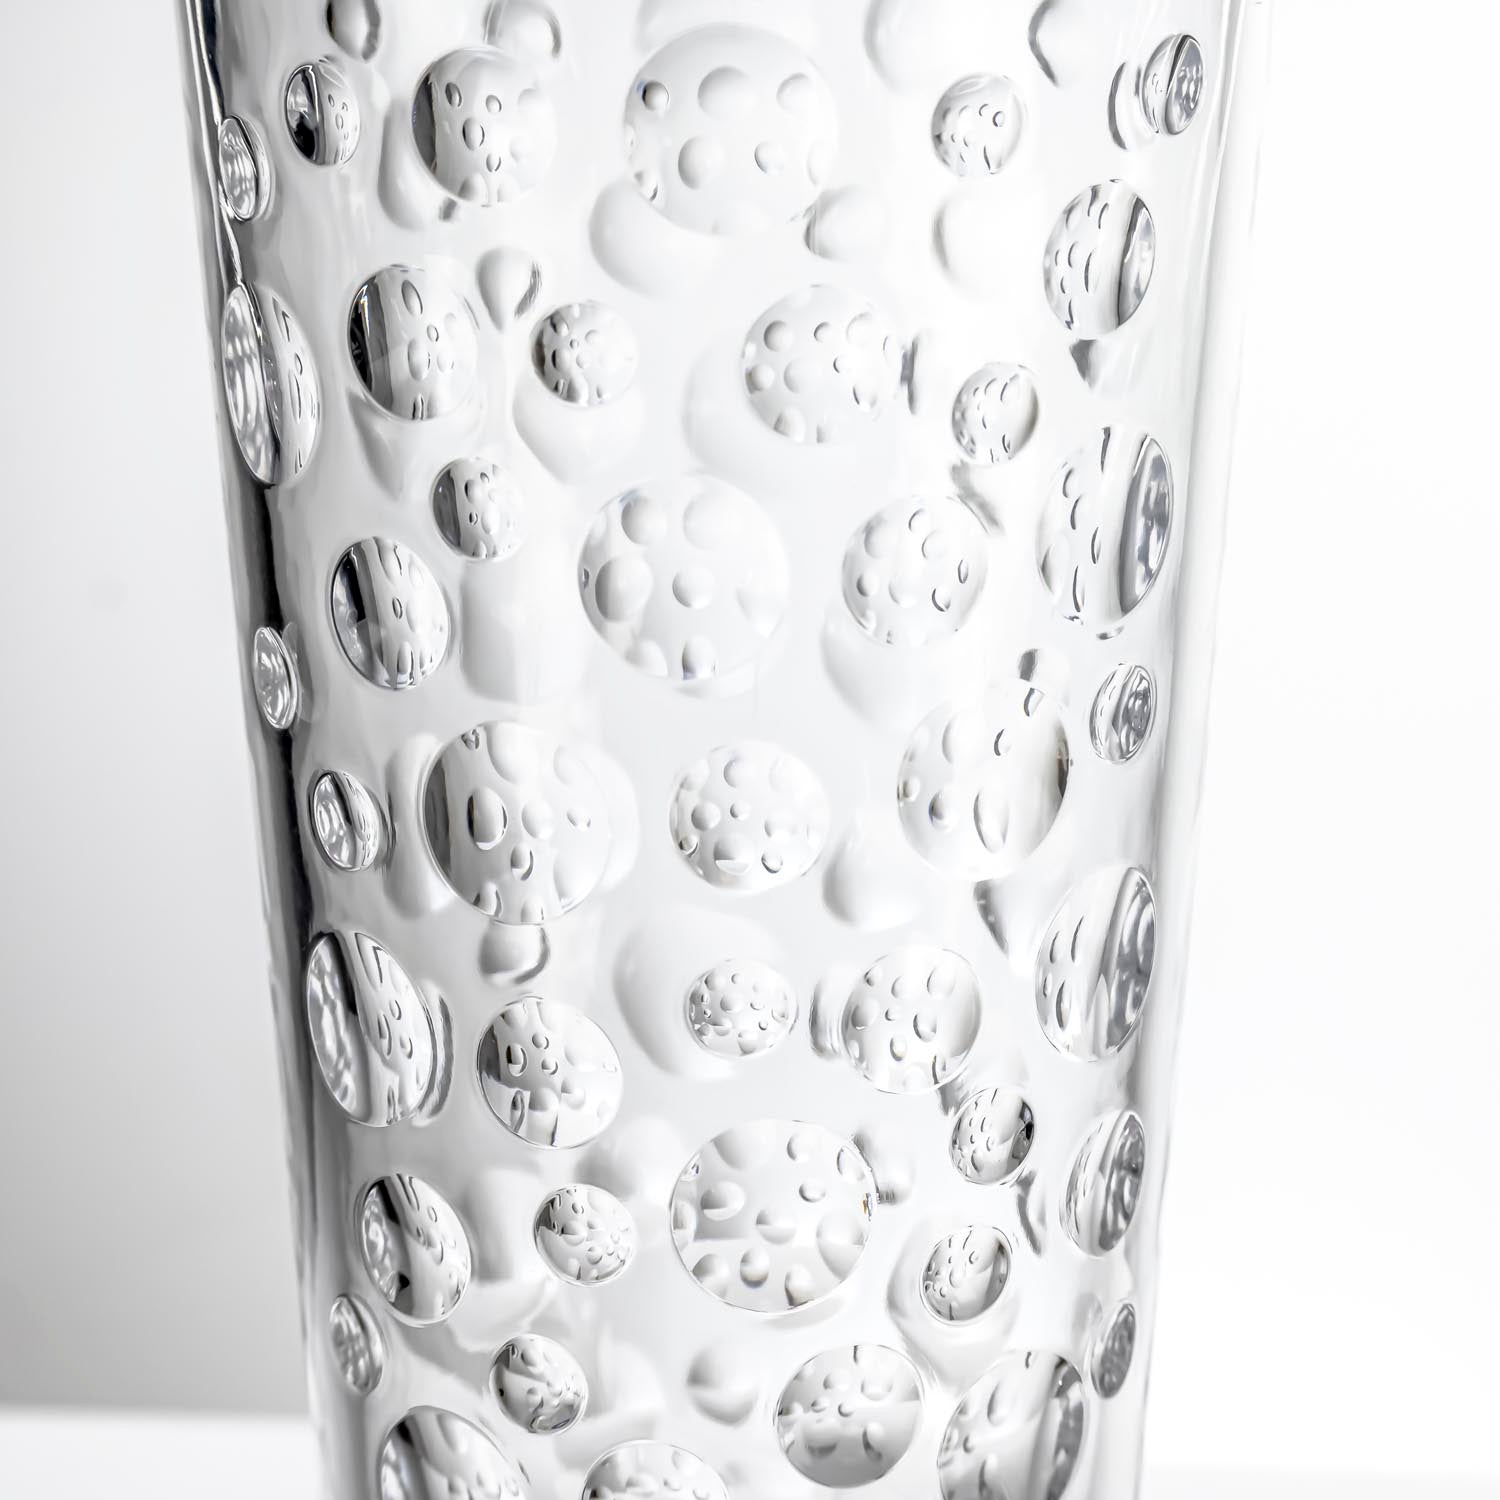 Merritt Designs Satin Pearl Clear 20oz Acrylic Tumbler